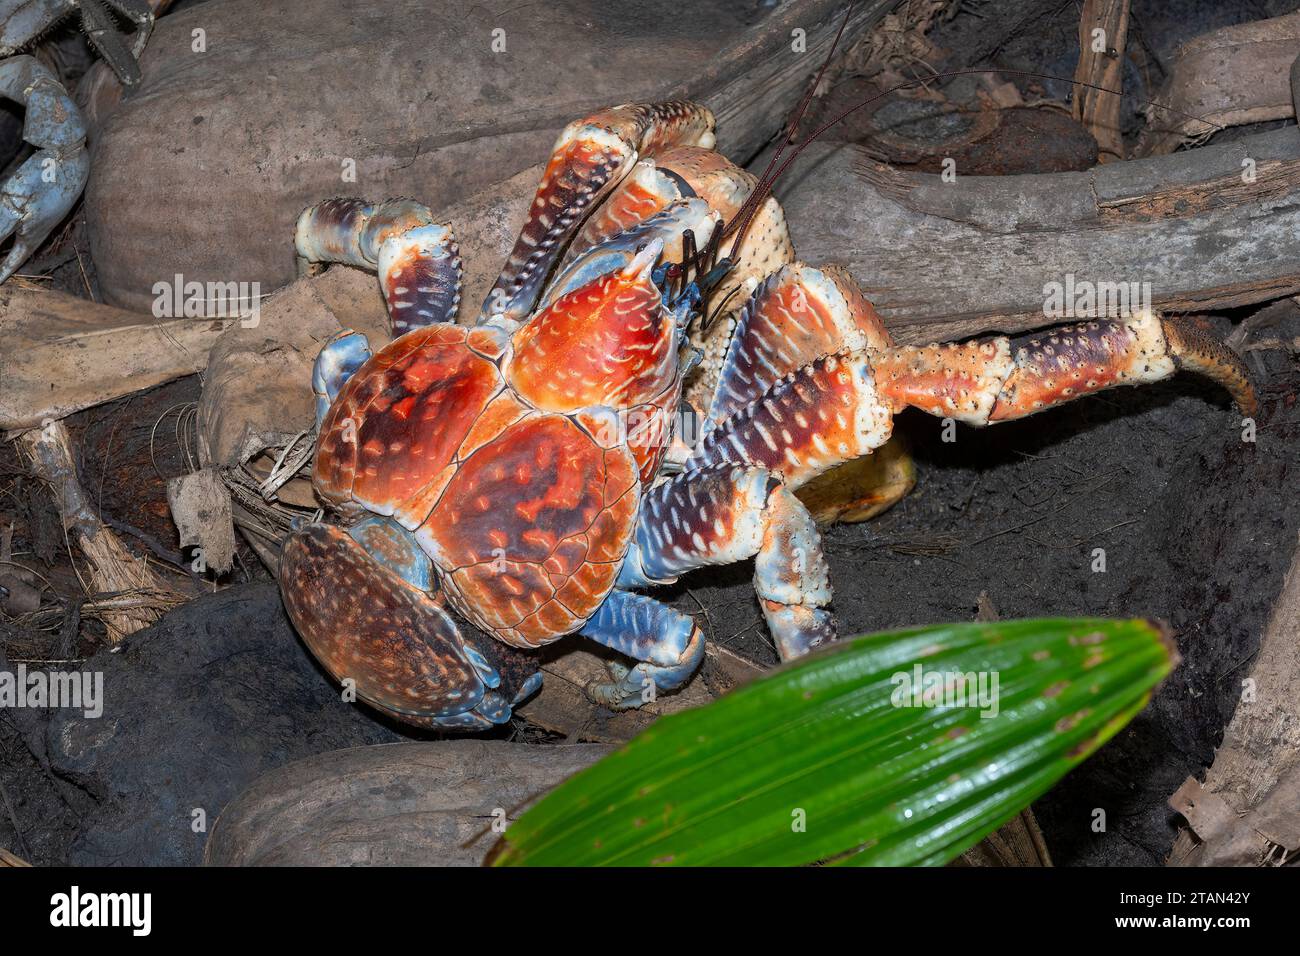 Close-up of a rare giant Coconut crab or Robber Crab (Birgus latro), Christmas Island, Australia Stock Photo